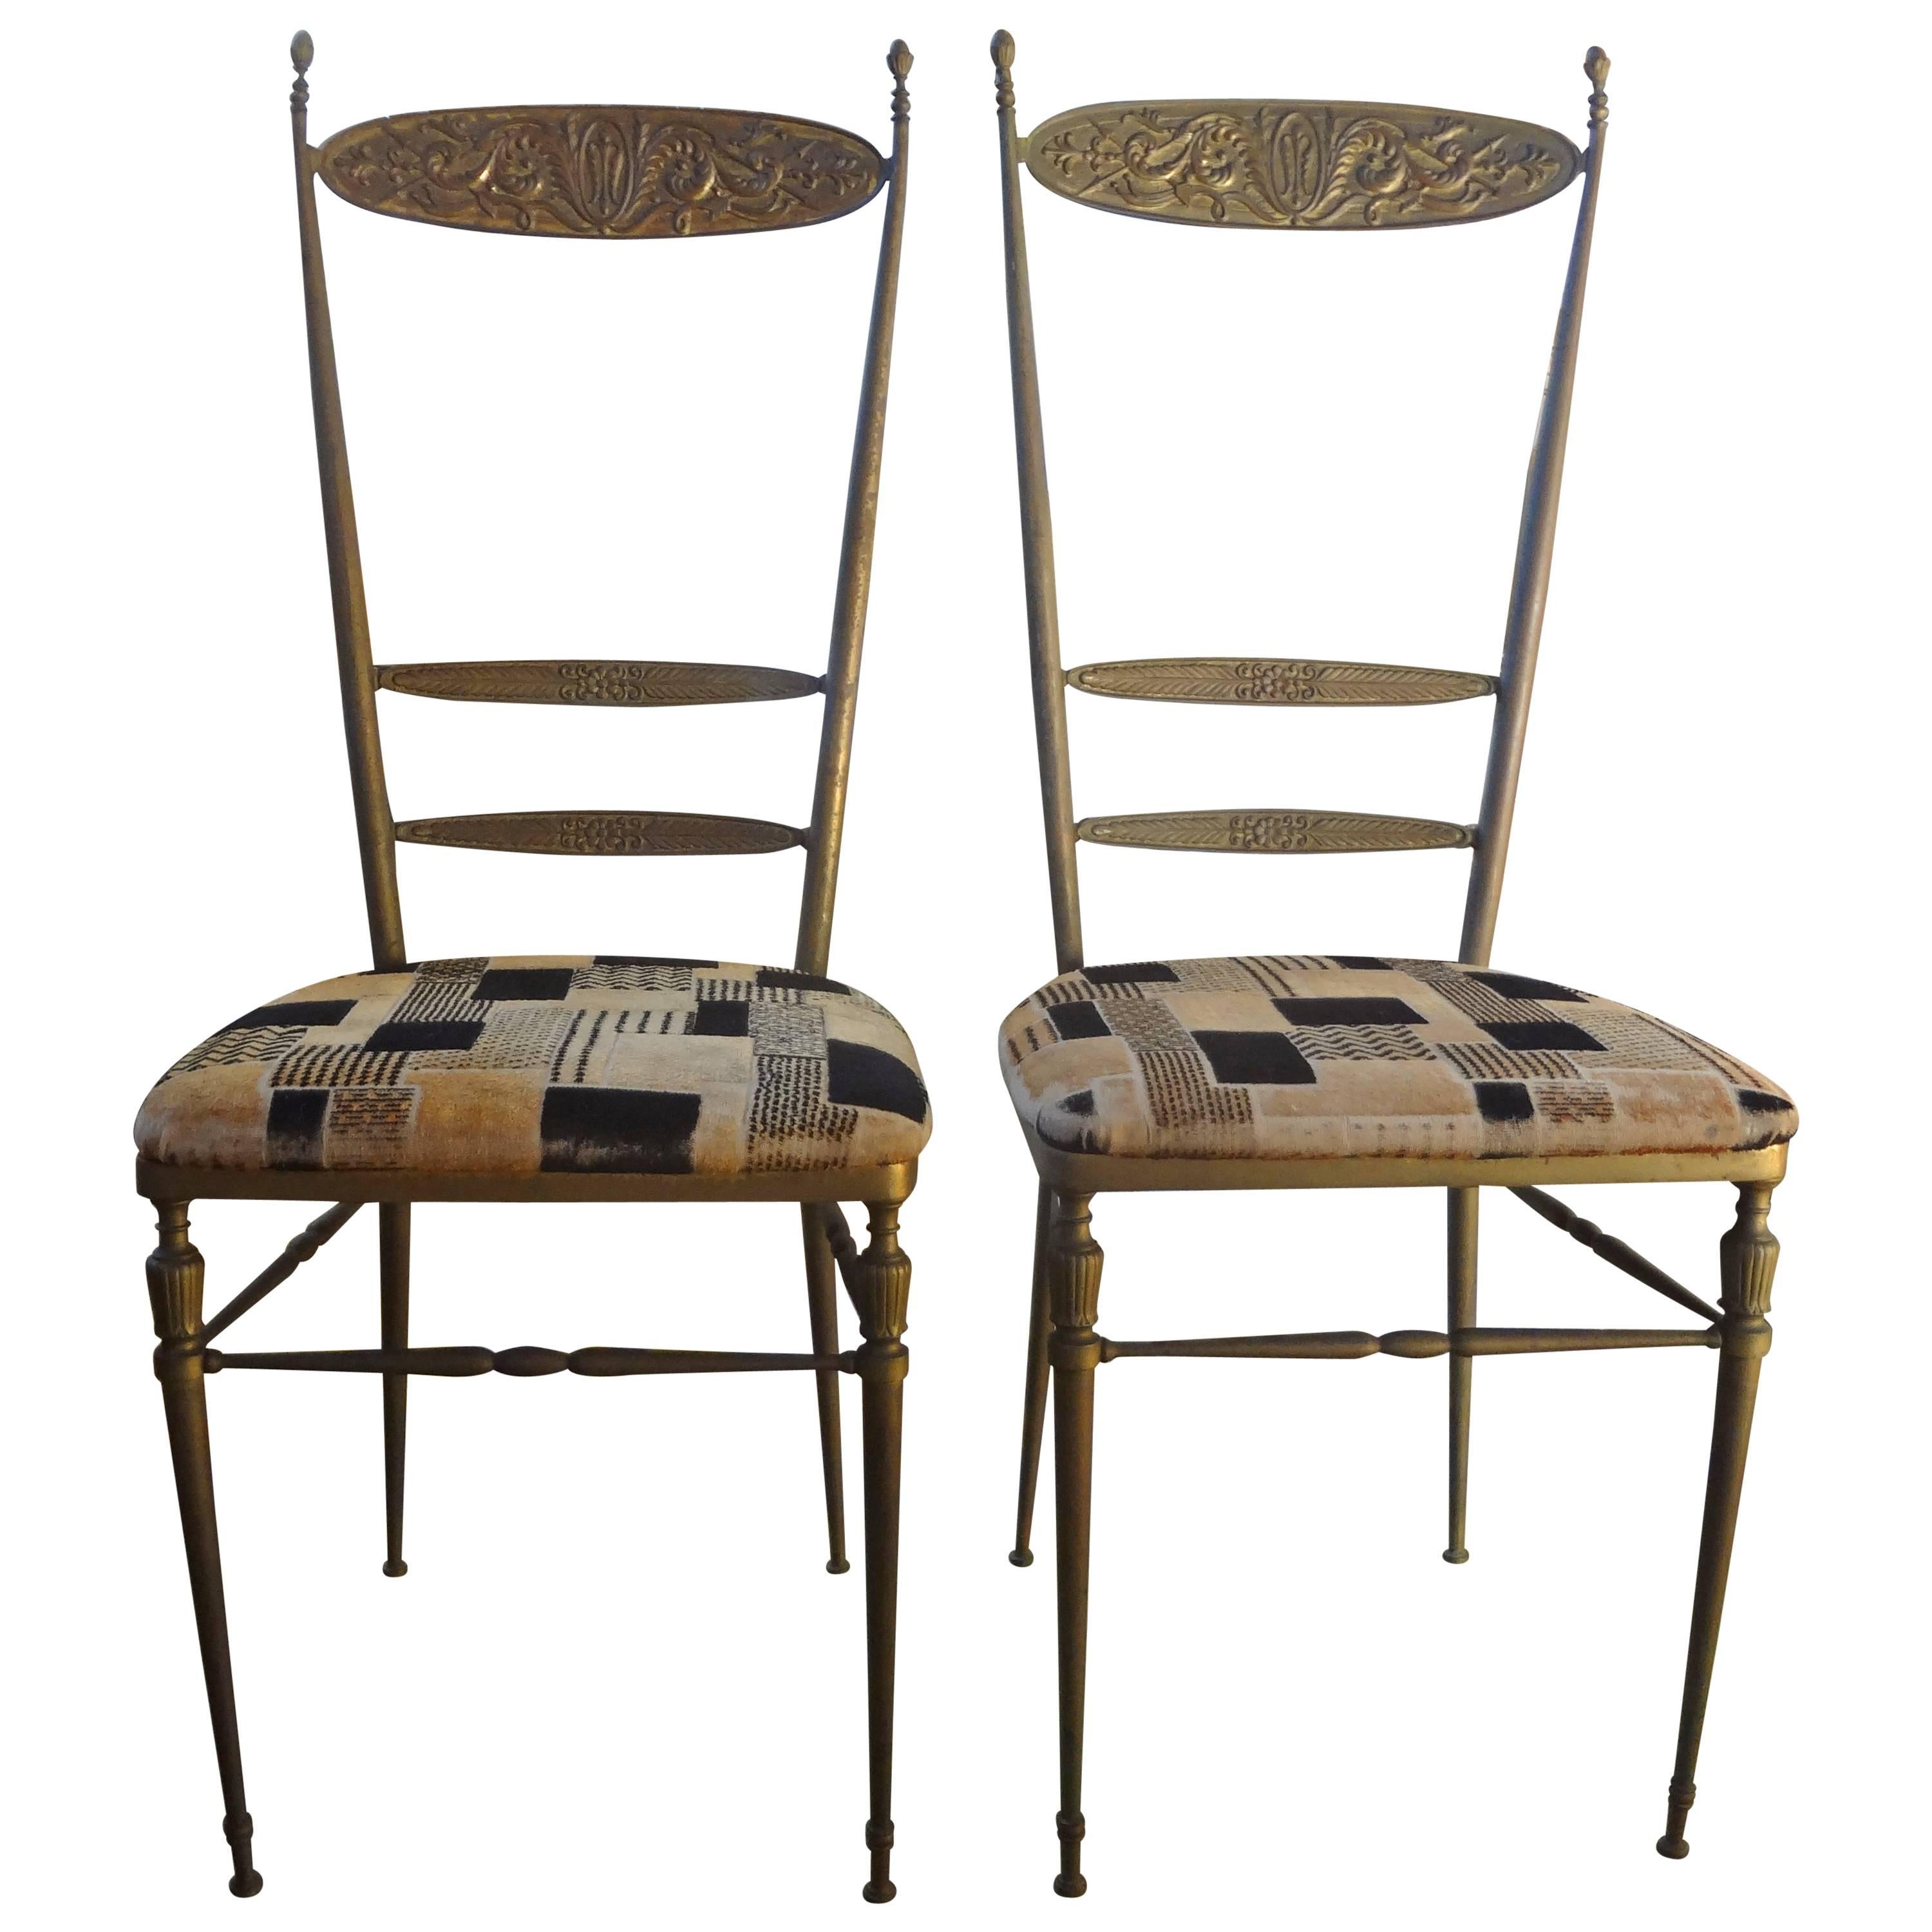 Unusual Pair of Tall Brass Italian Chiavari Chairs